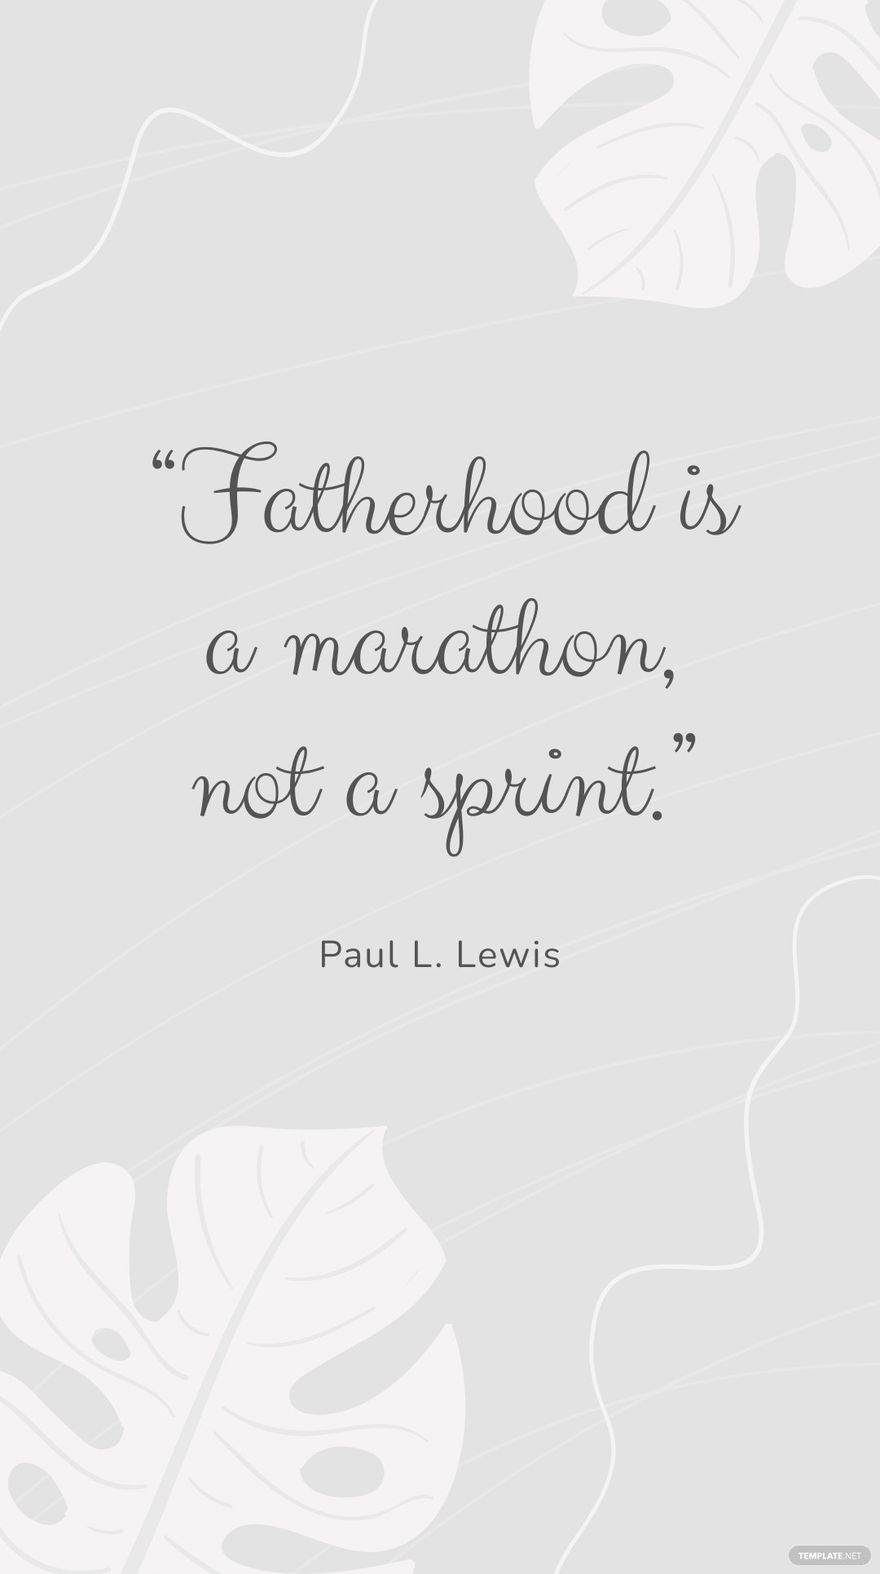 Free Paul L. Lewis - “Fatherhood is a marathon, not a sprint.” in JPG